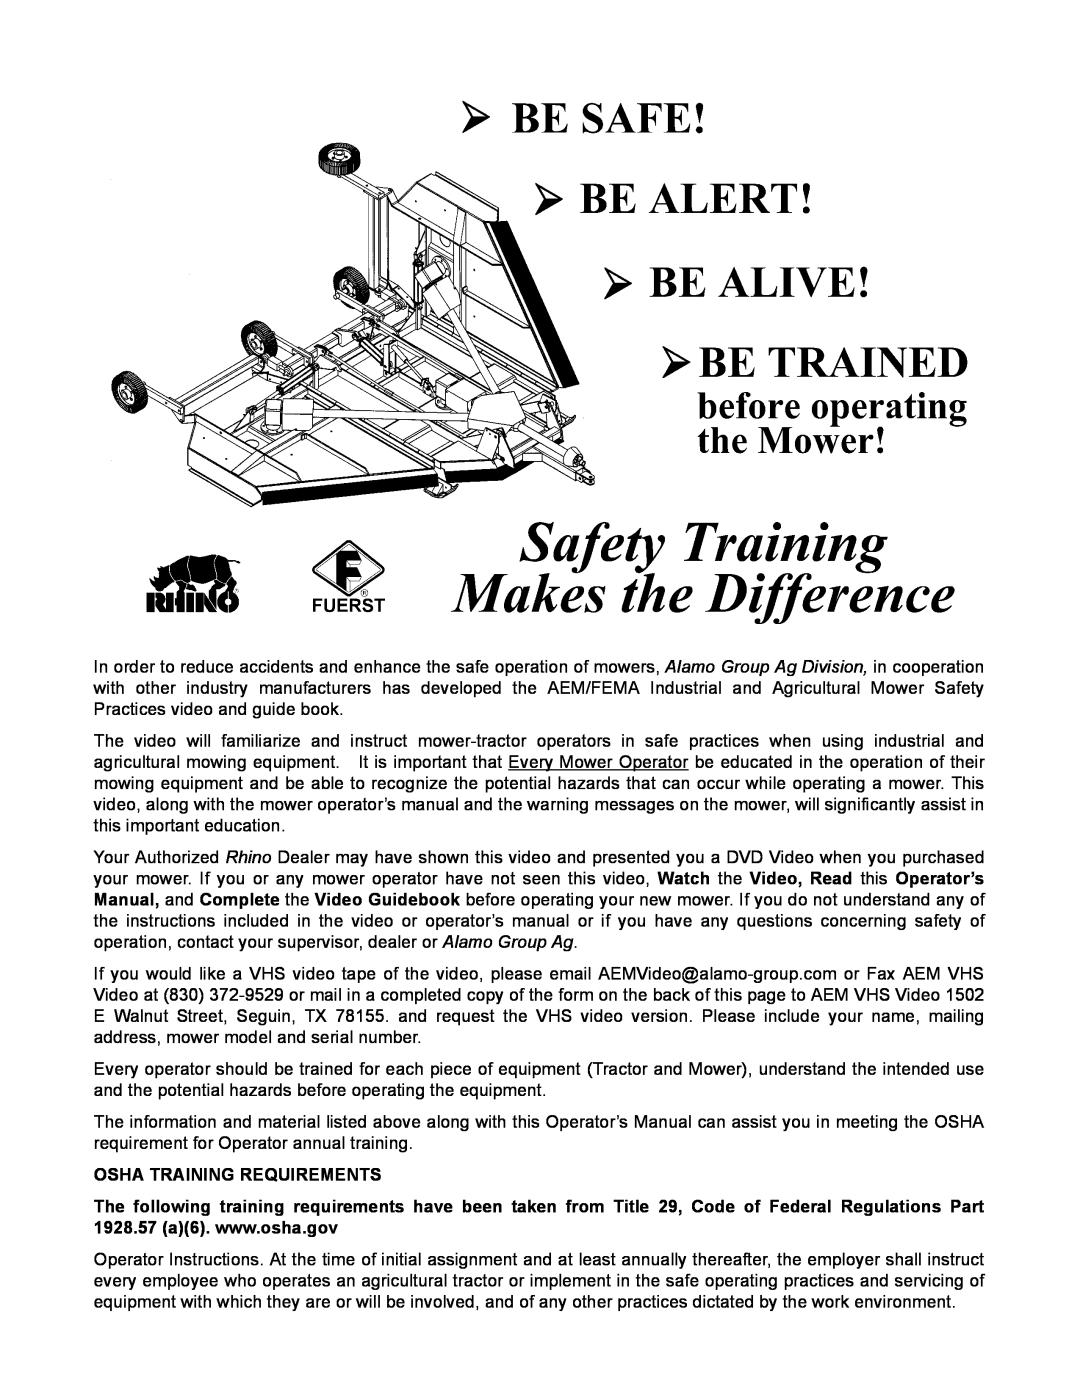 Alamo 284, 260, 272 manual Osha Training Requirements 